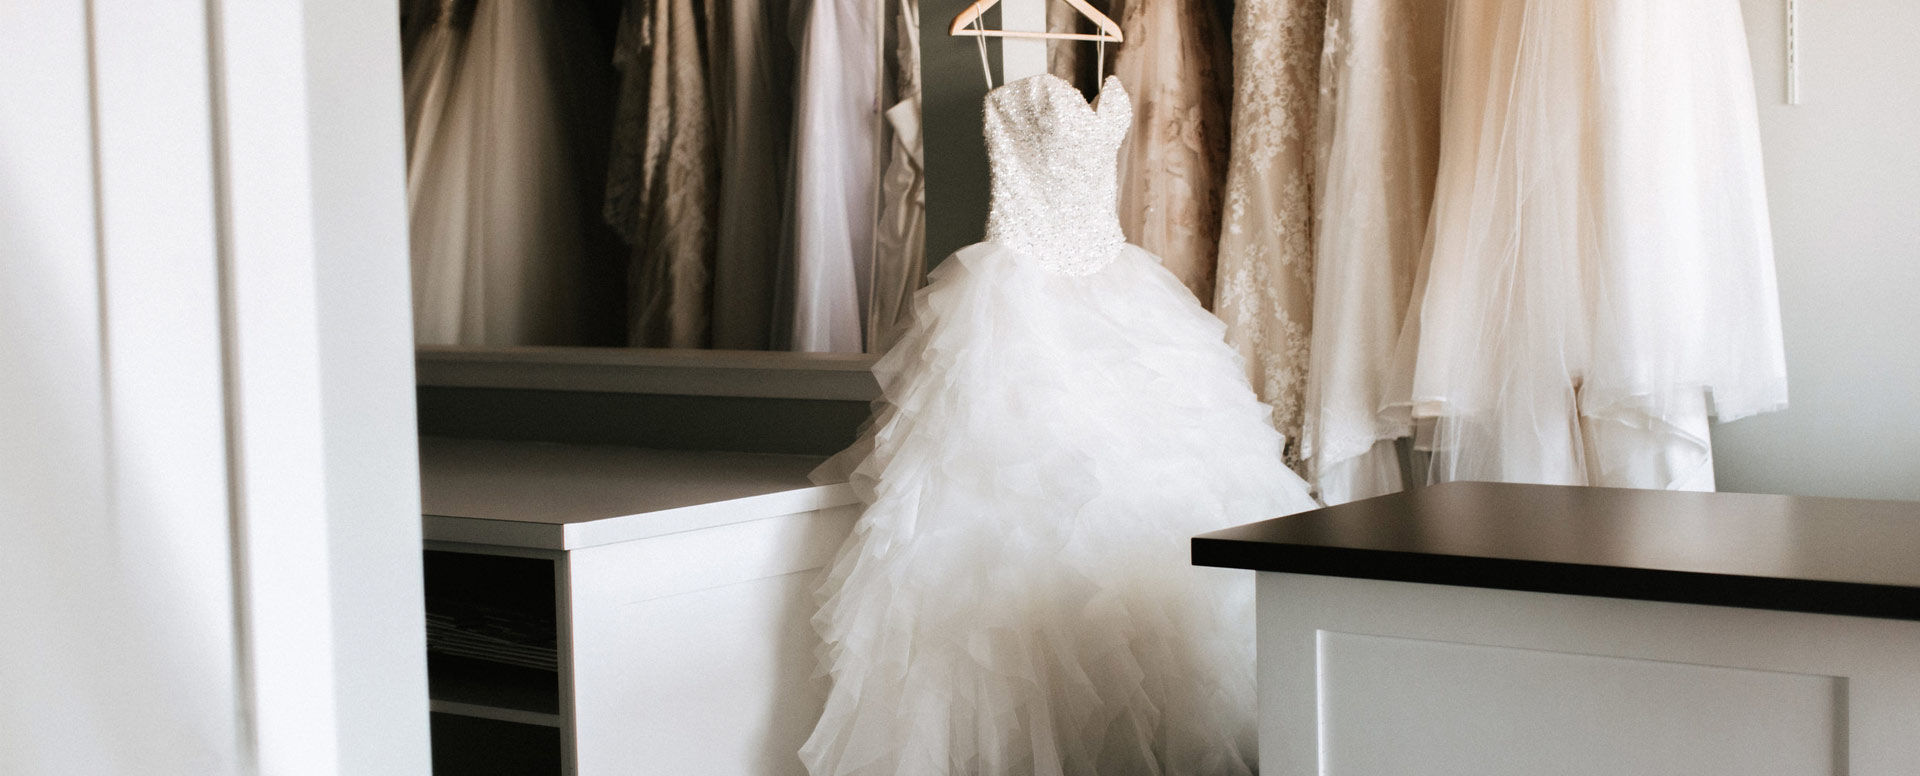 Ideas For Dry Cleaner For Wedding Dress Near Me Wedding